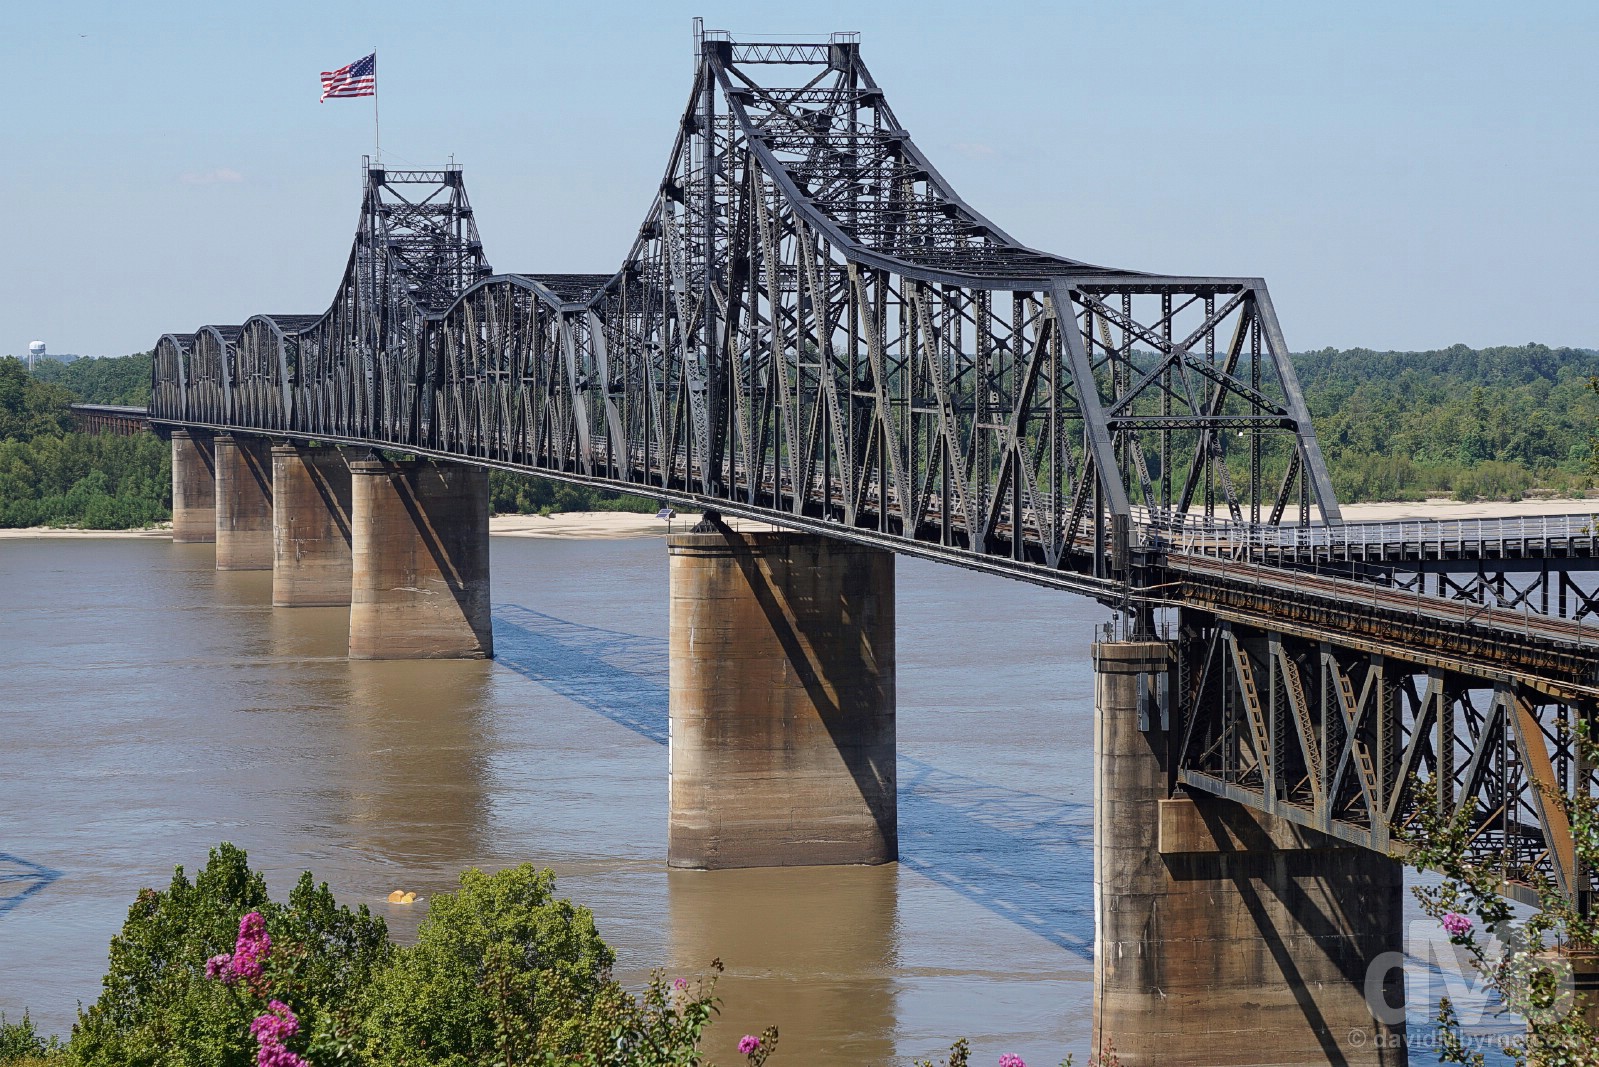 The Old Vicksburg Bridge, also known as Mississippi River Bridge, spanning the Mississippi River in between Delta, Louisiana and Vicksburg, Mississippi, USA. September 20, 2016.